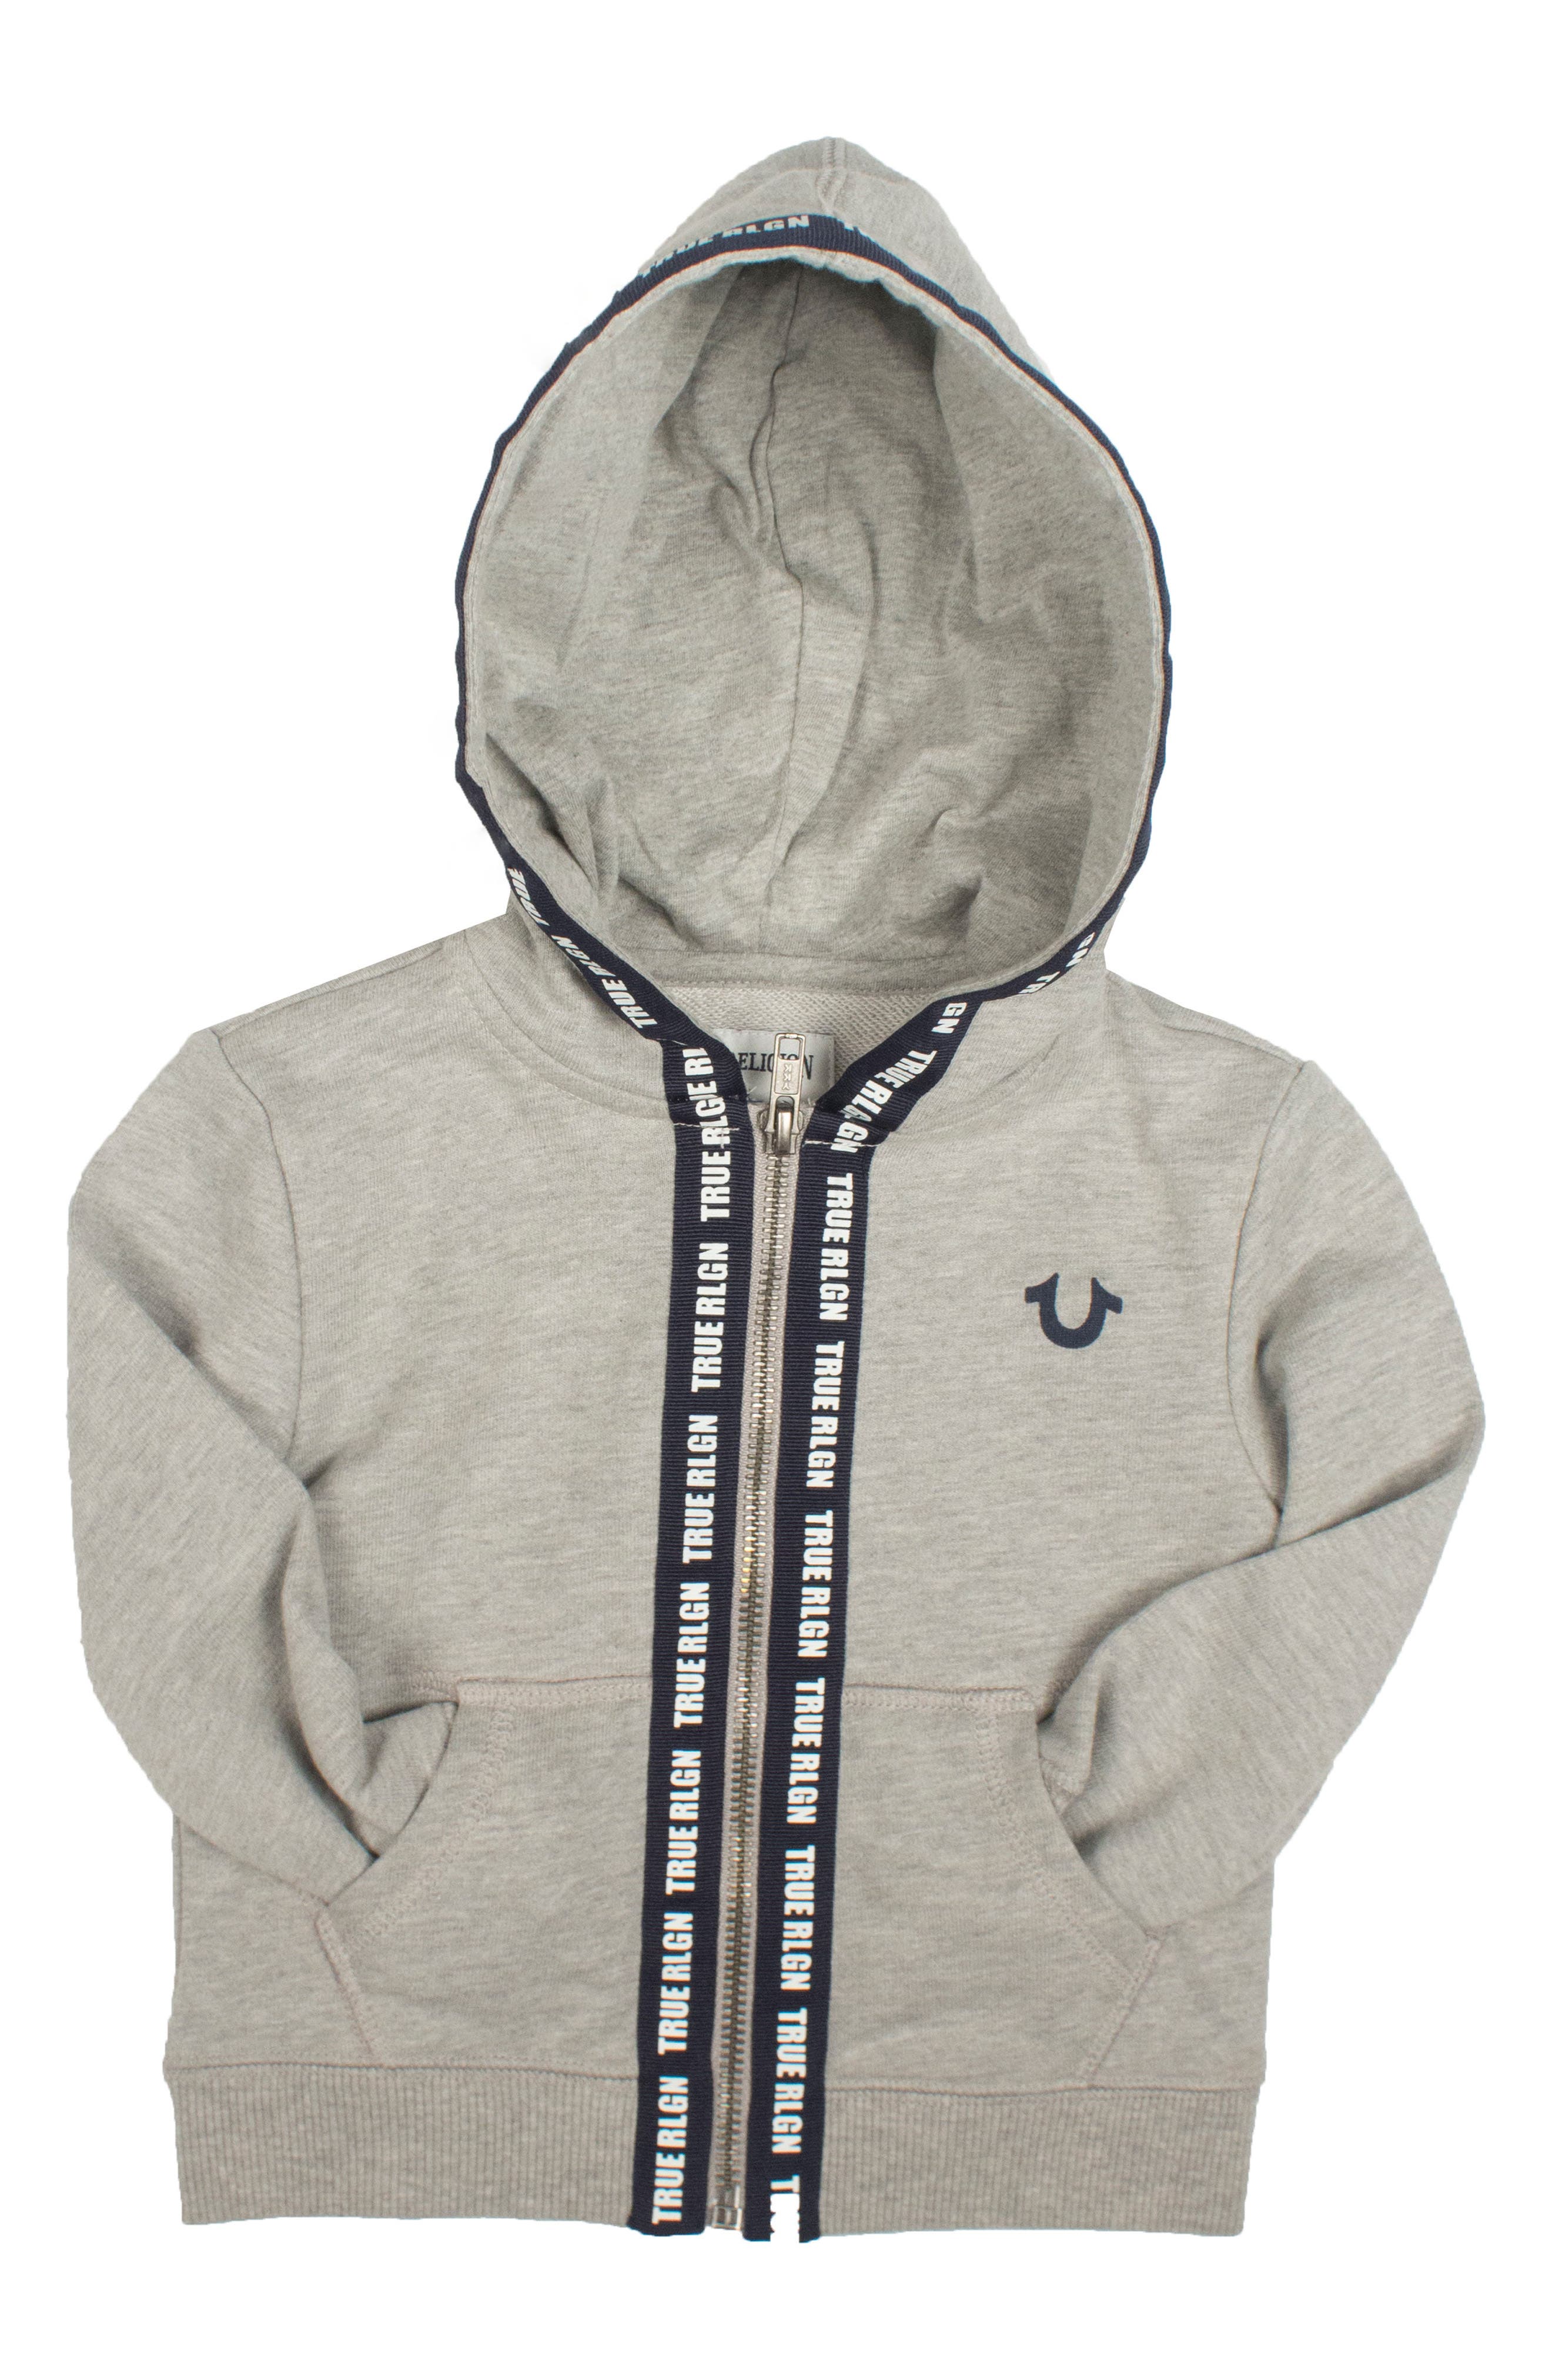 true religion hoodie zipper